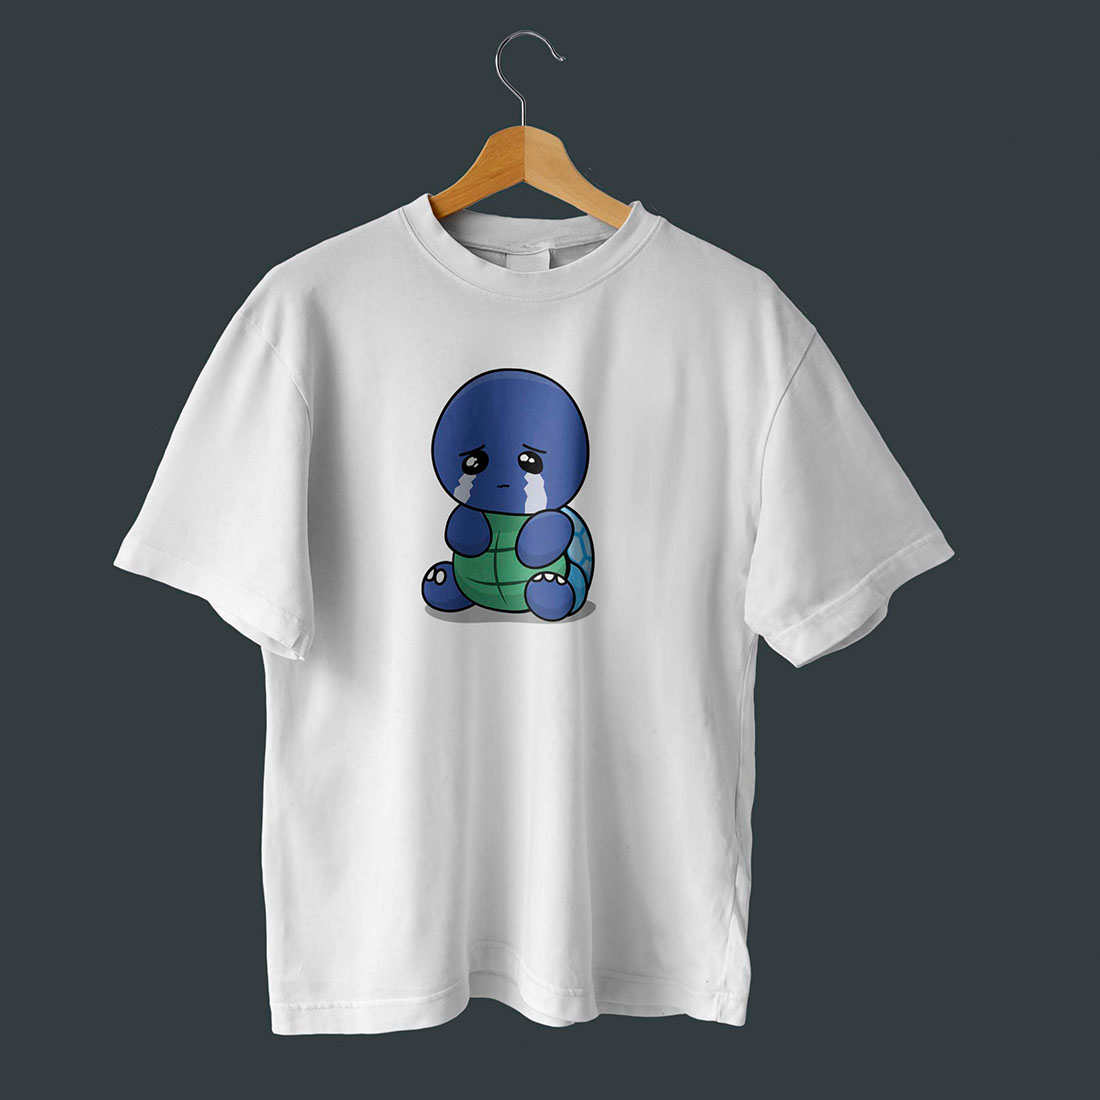 Cute Sad Turtle Illustration T-Shirt Design cover image.